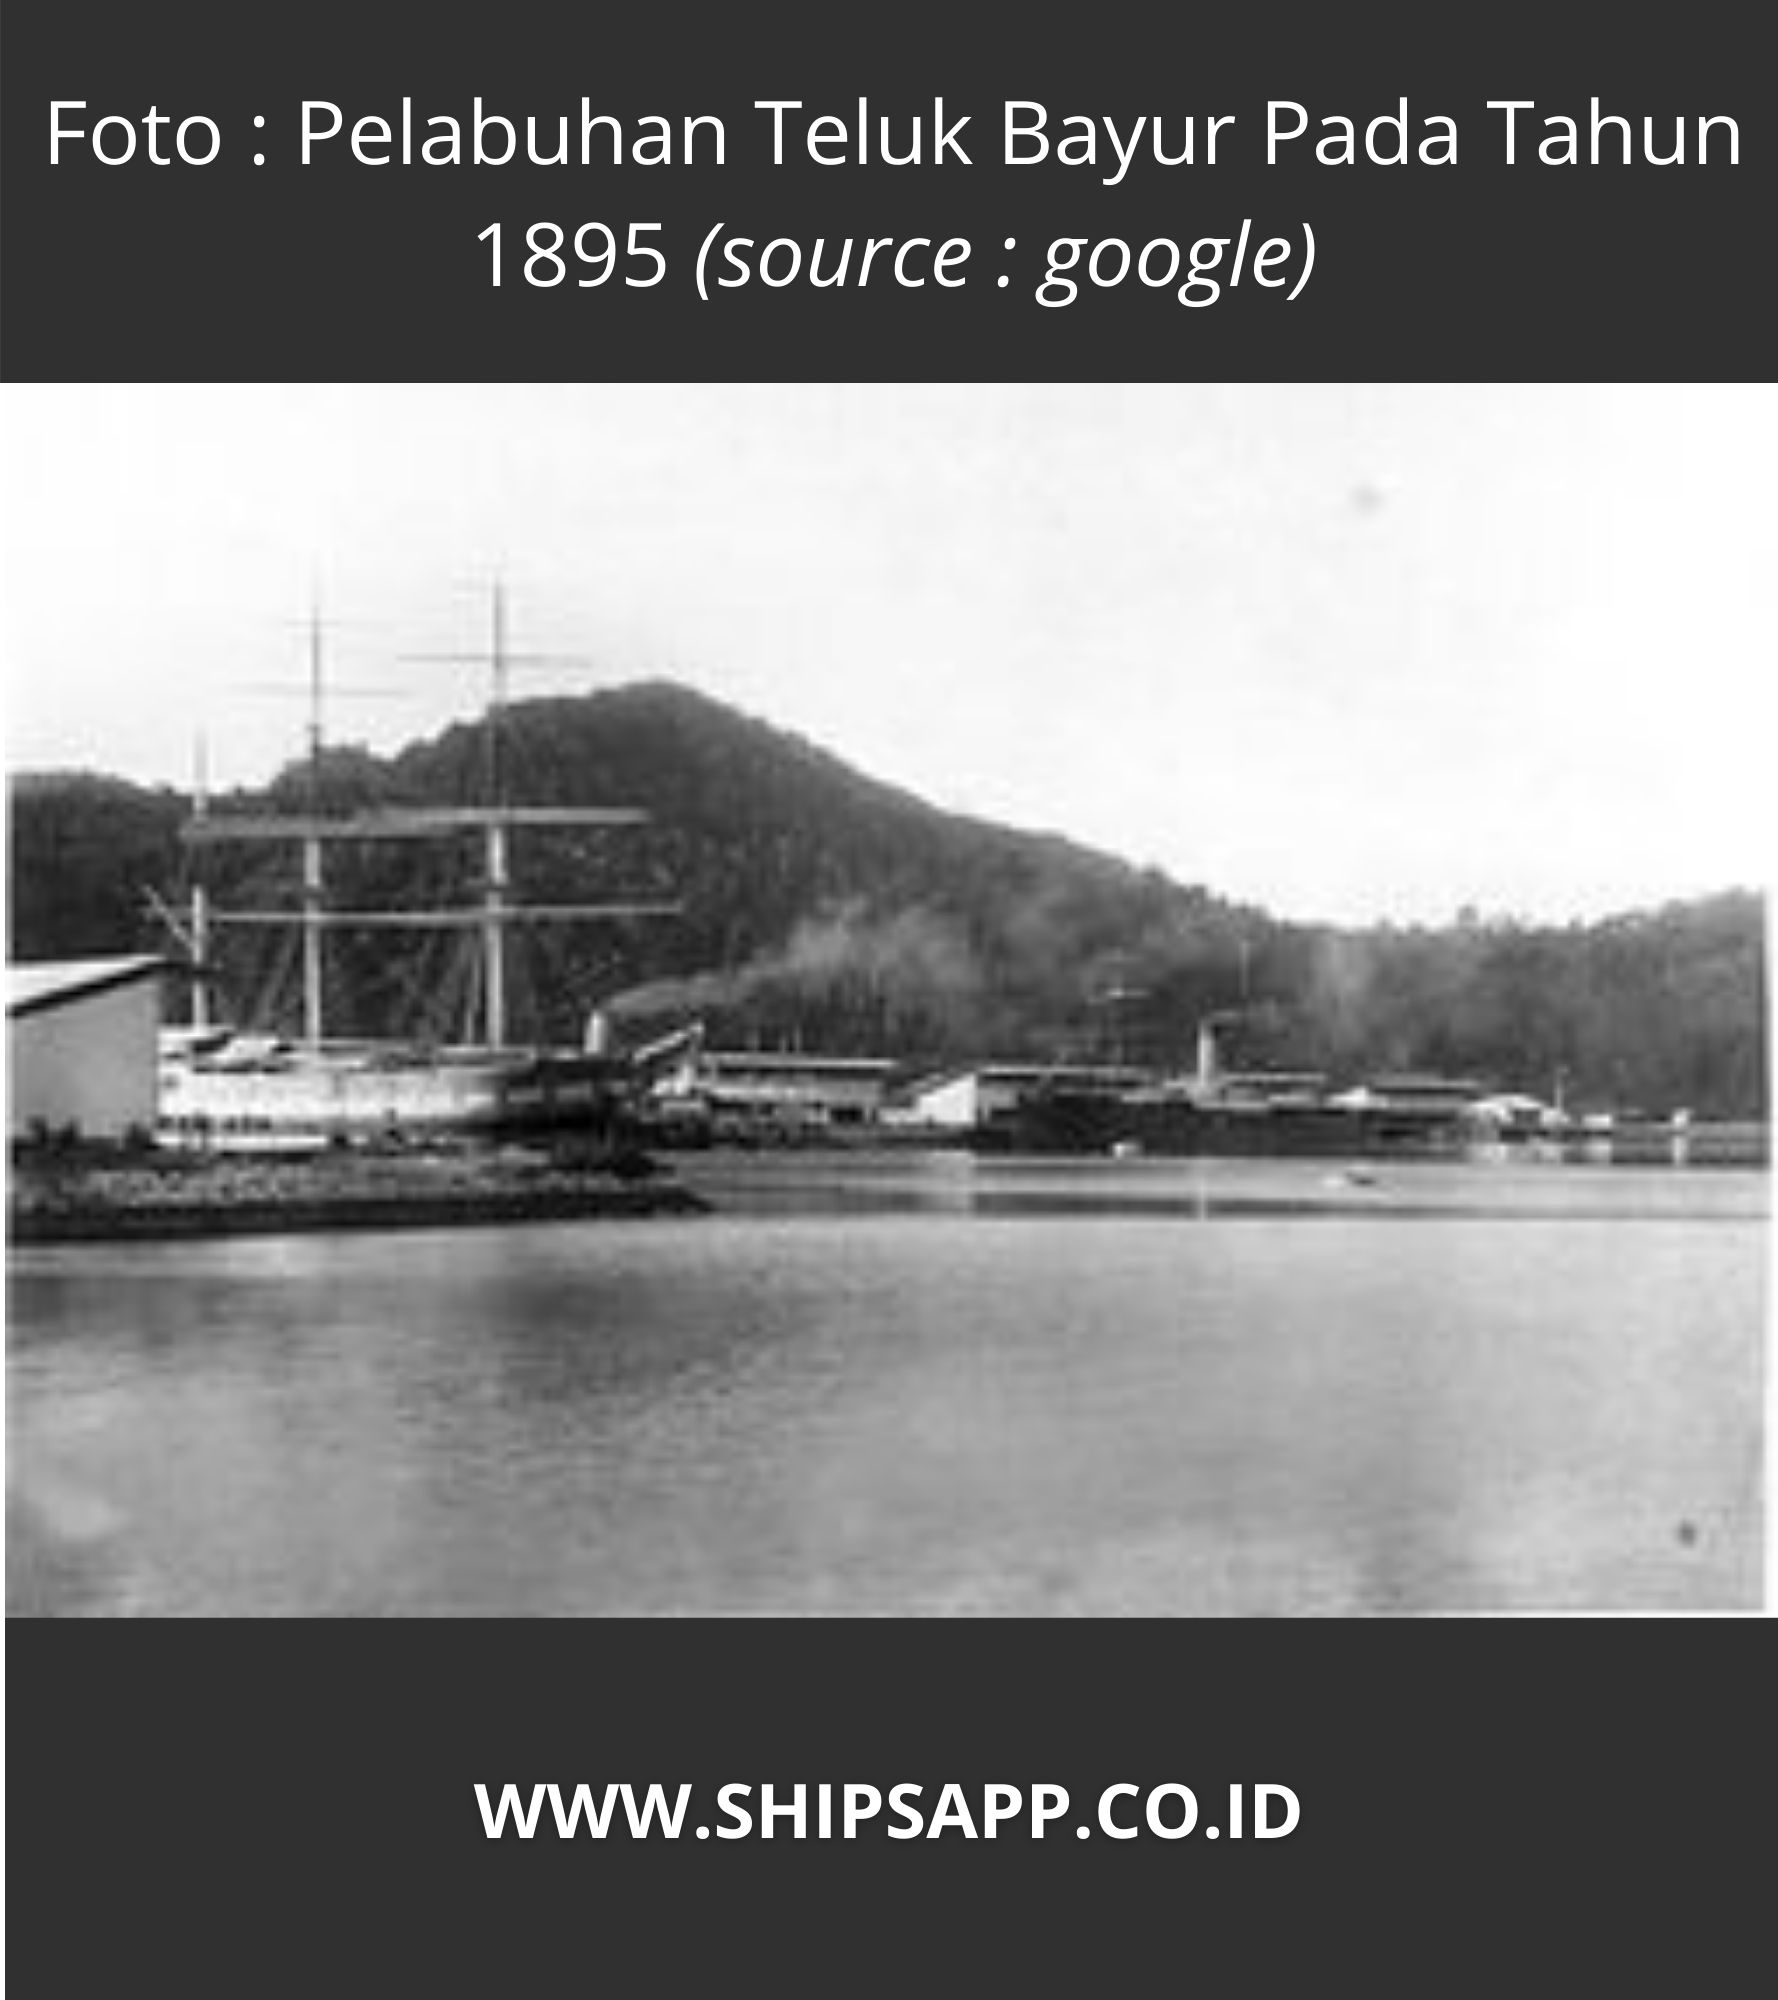 Sejarah Pelabuhan Teluk Bayur